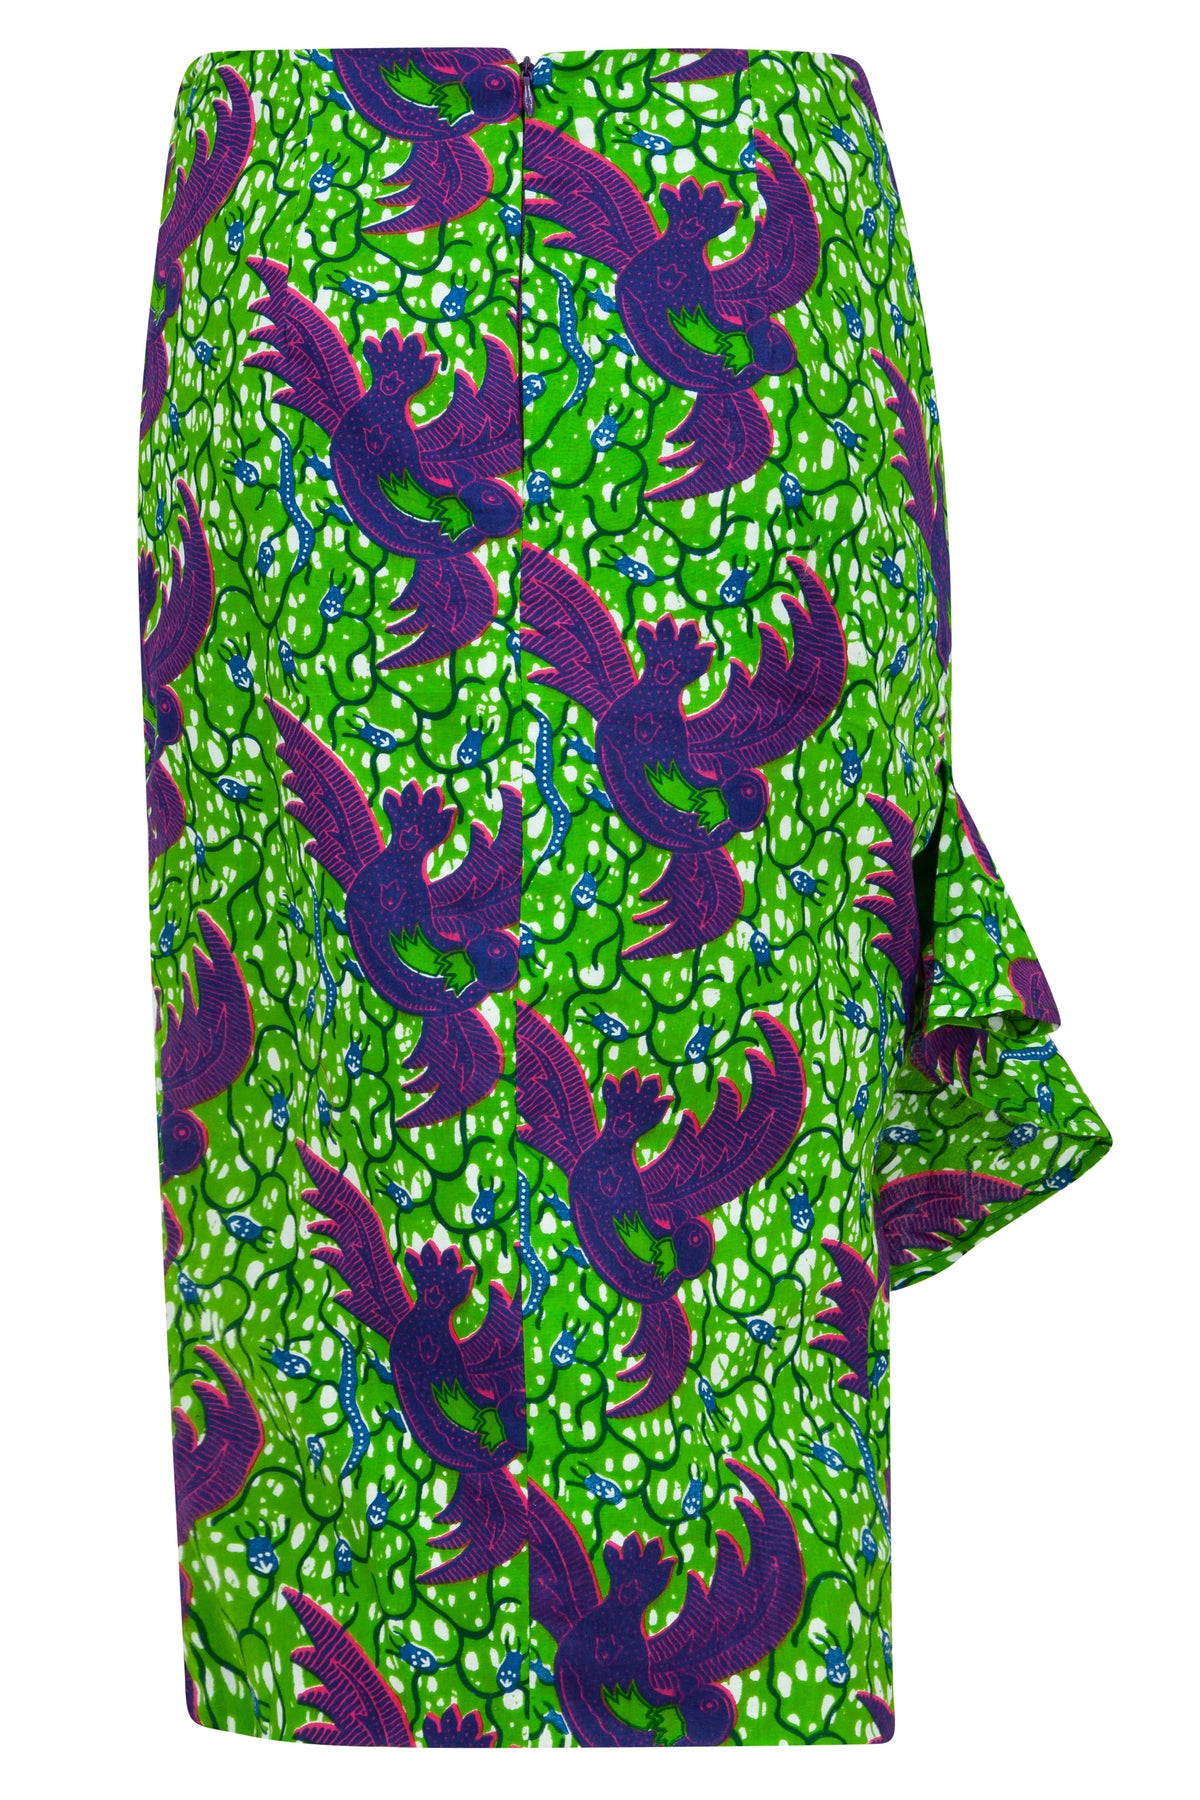 African print skirt Ohema Ohene